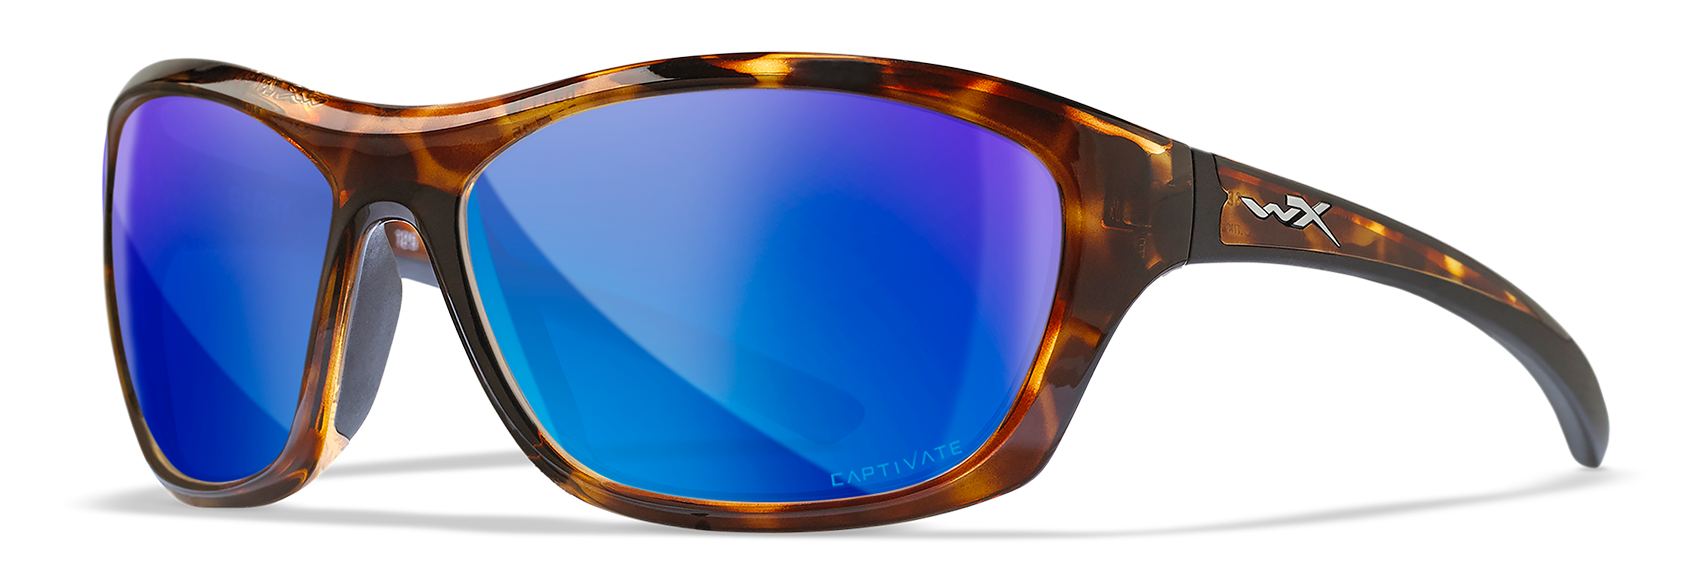 Wiley X WX GLORY Oval Sunglasses  Gloss Demi 63-15-125